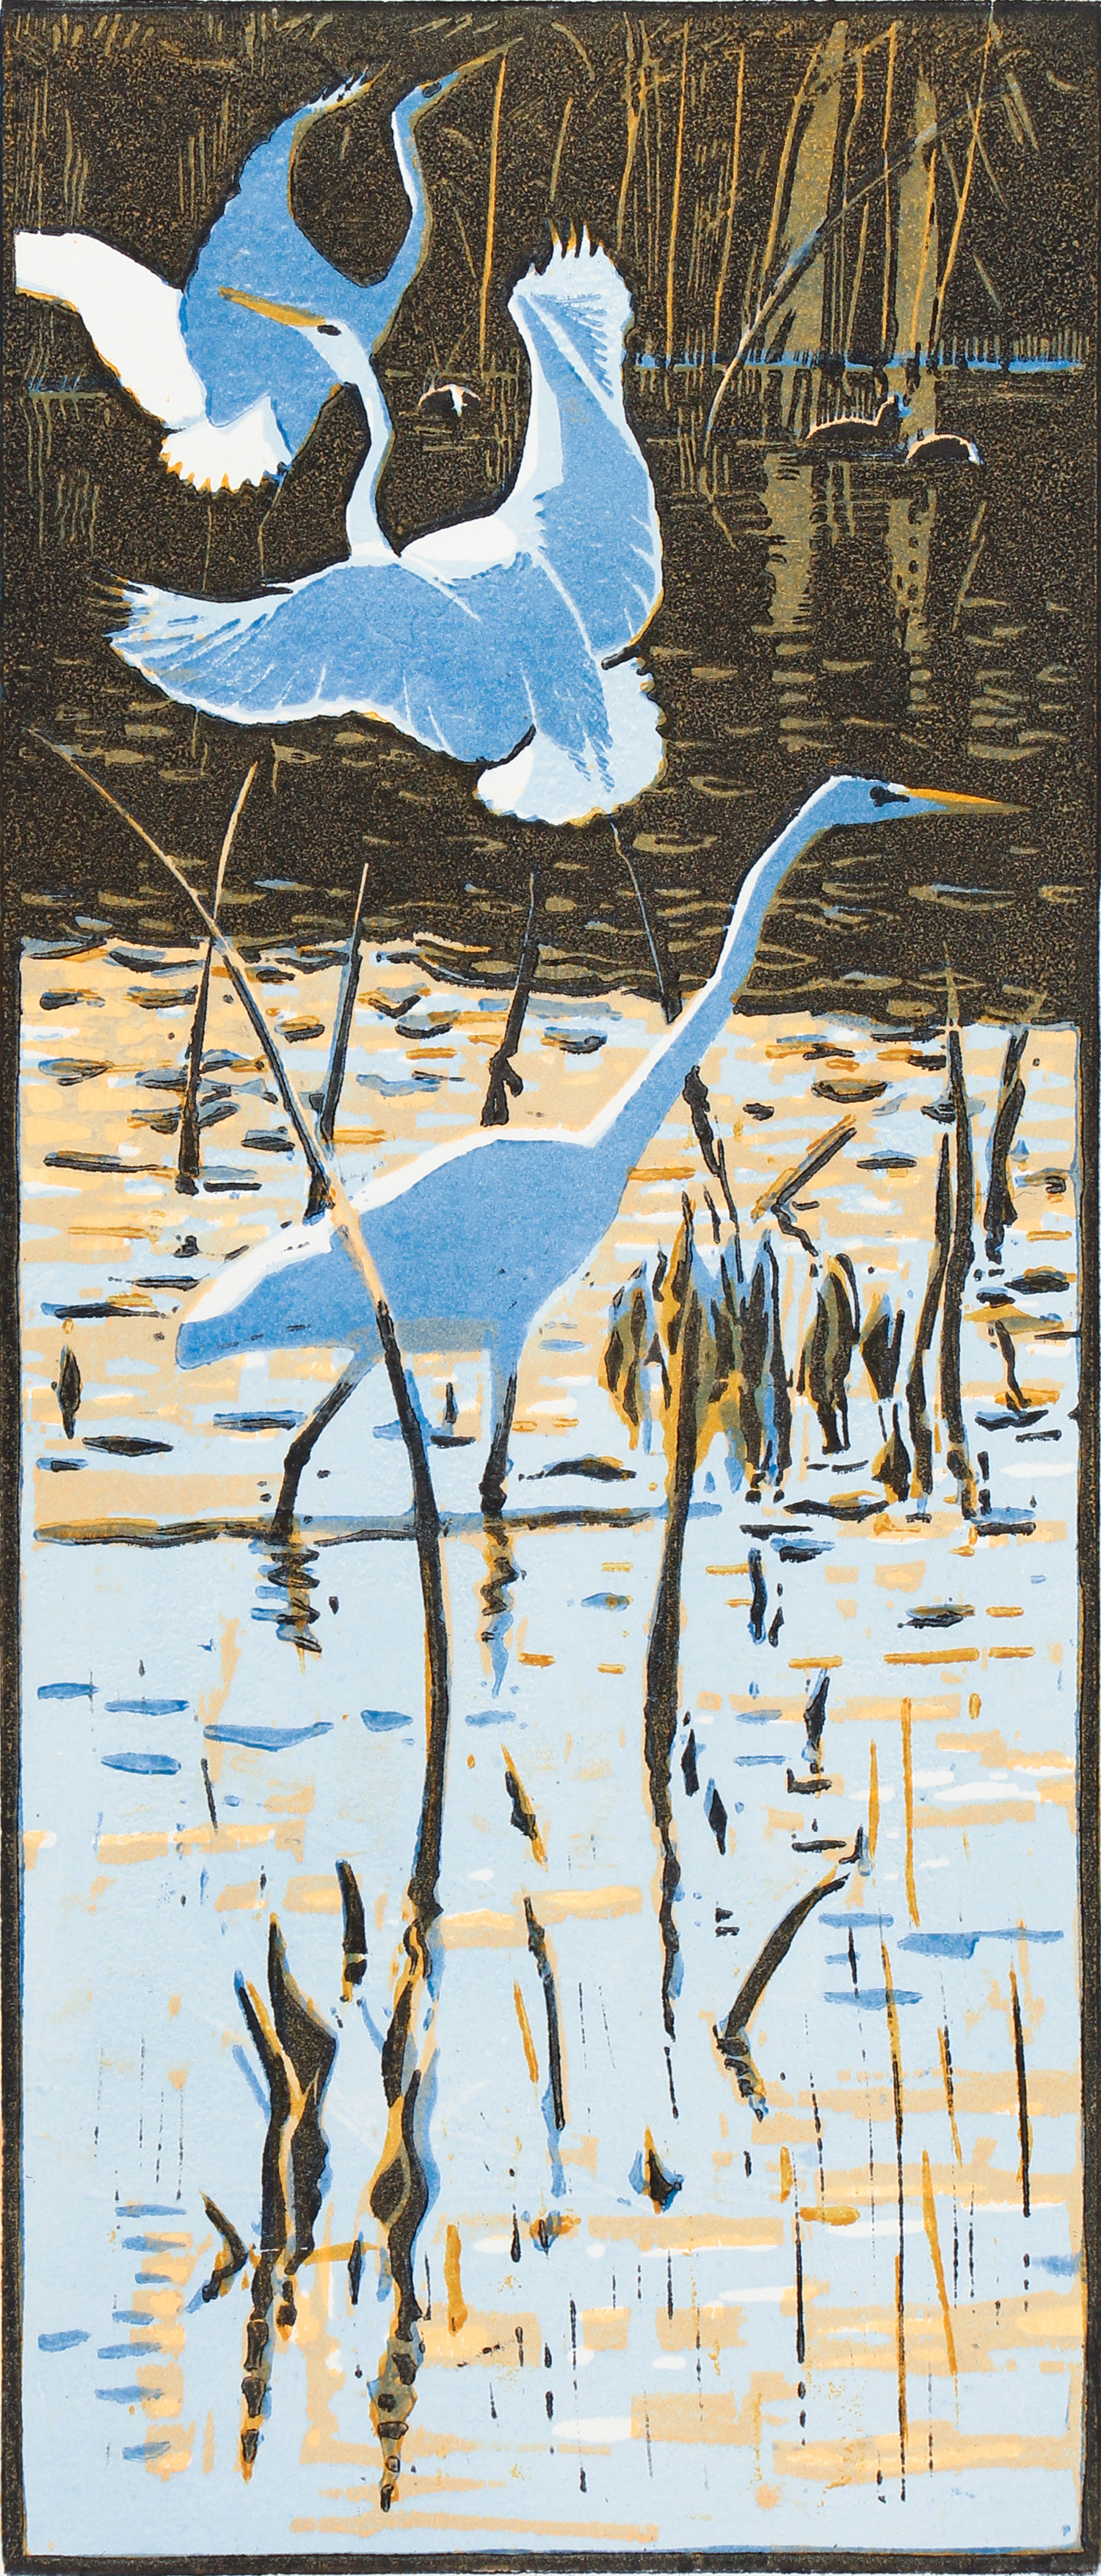 Great White Egrets by Robert Greenhalf